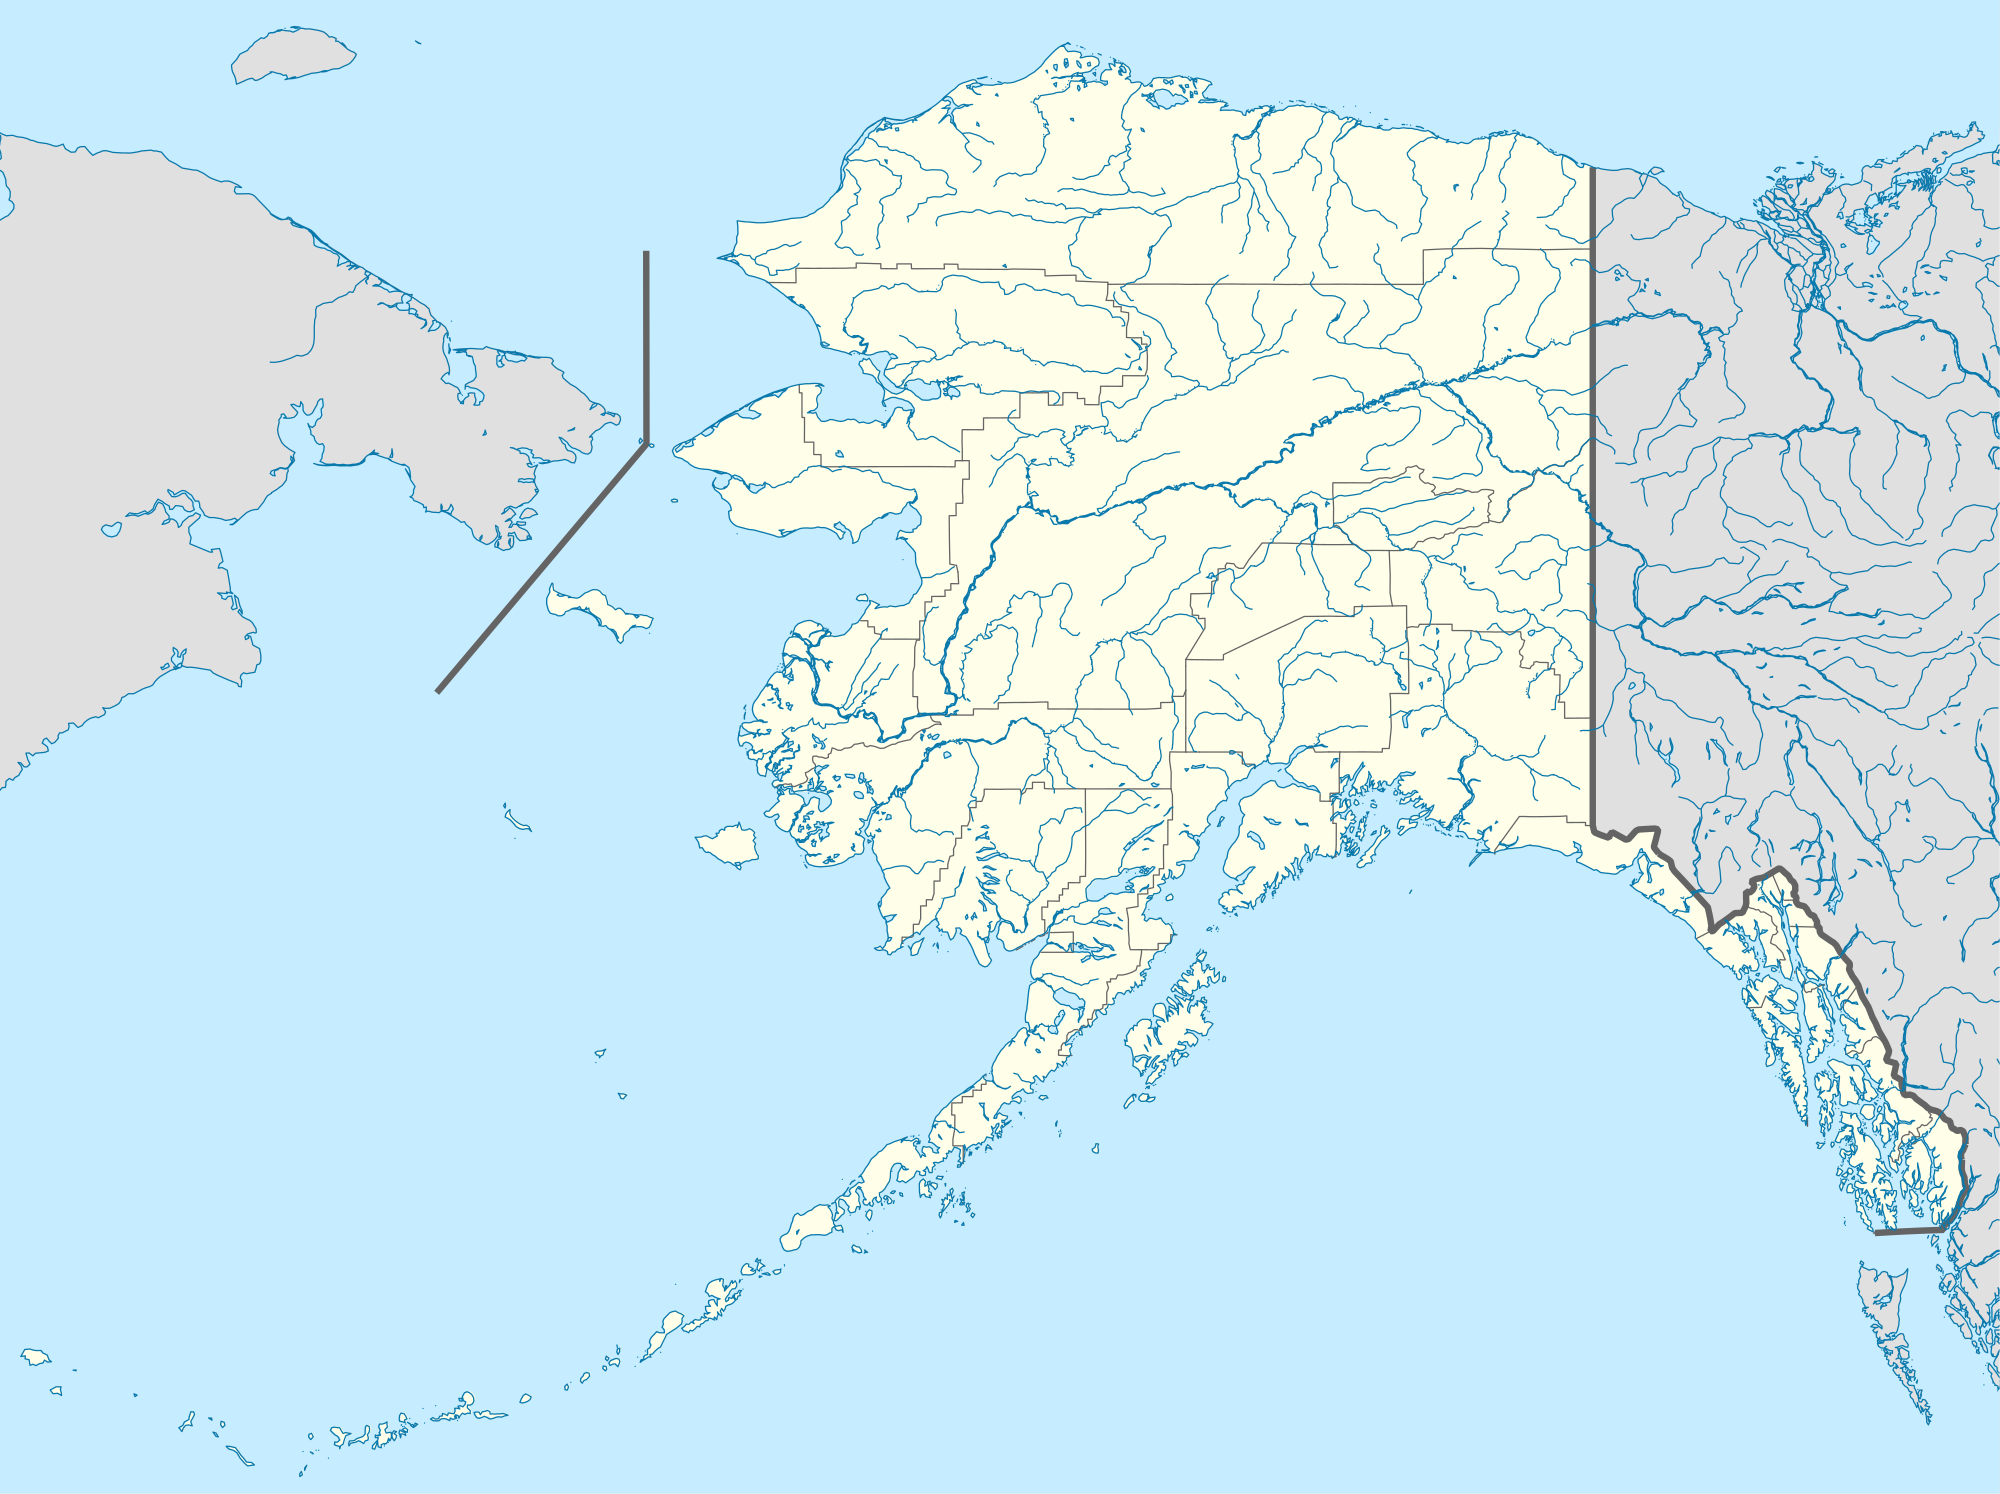 University of Alaska Southeast is located in Alaska